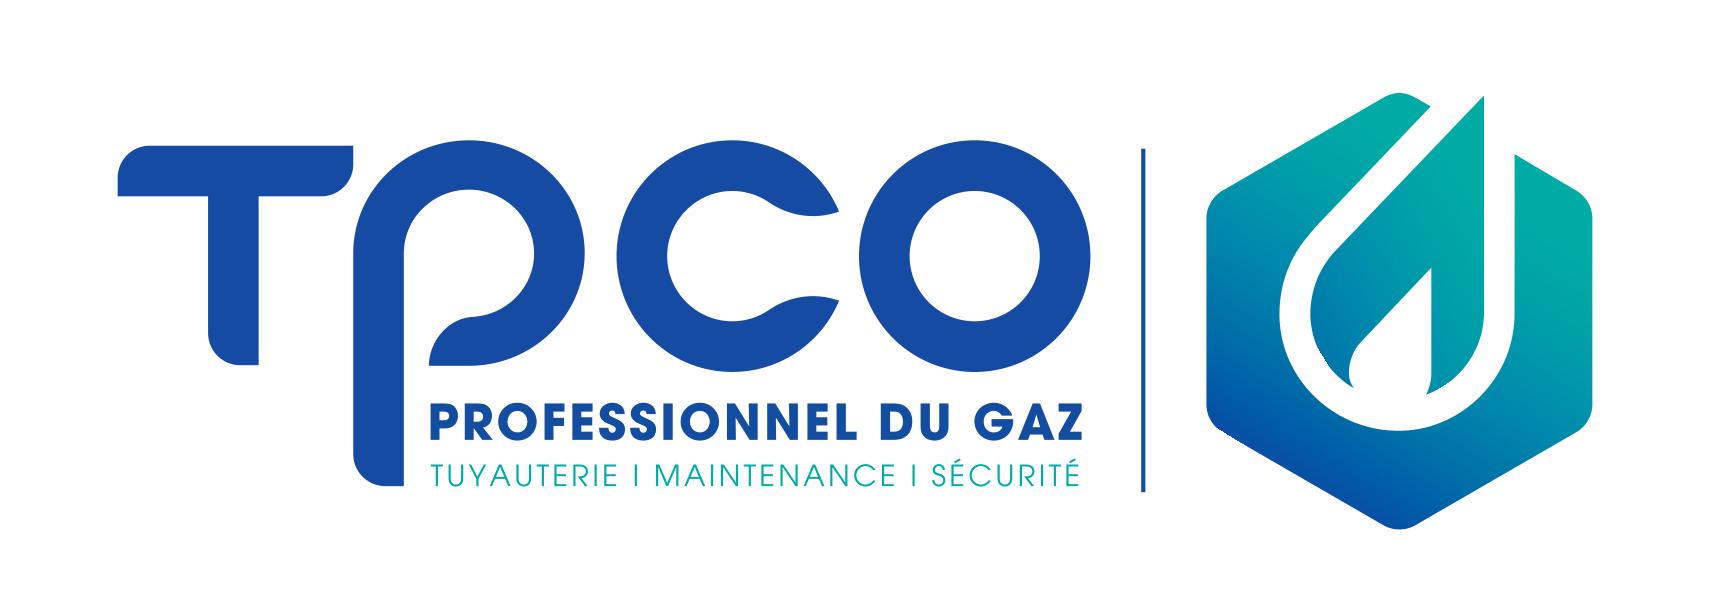 Logo-TPCO - agence LUCIE